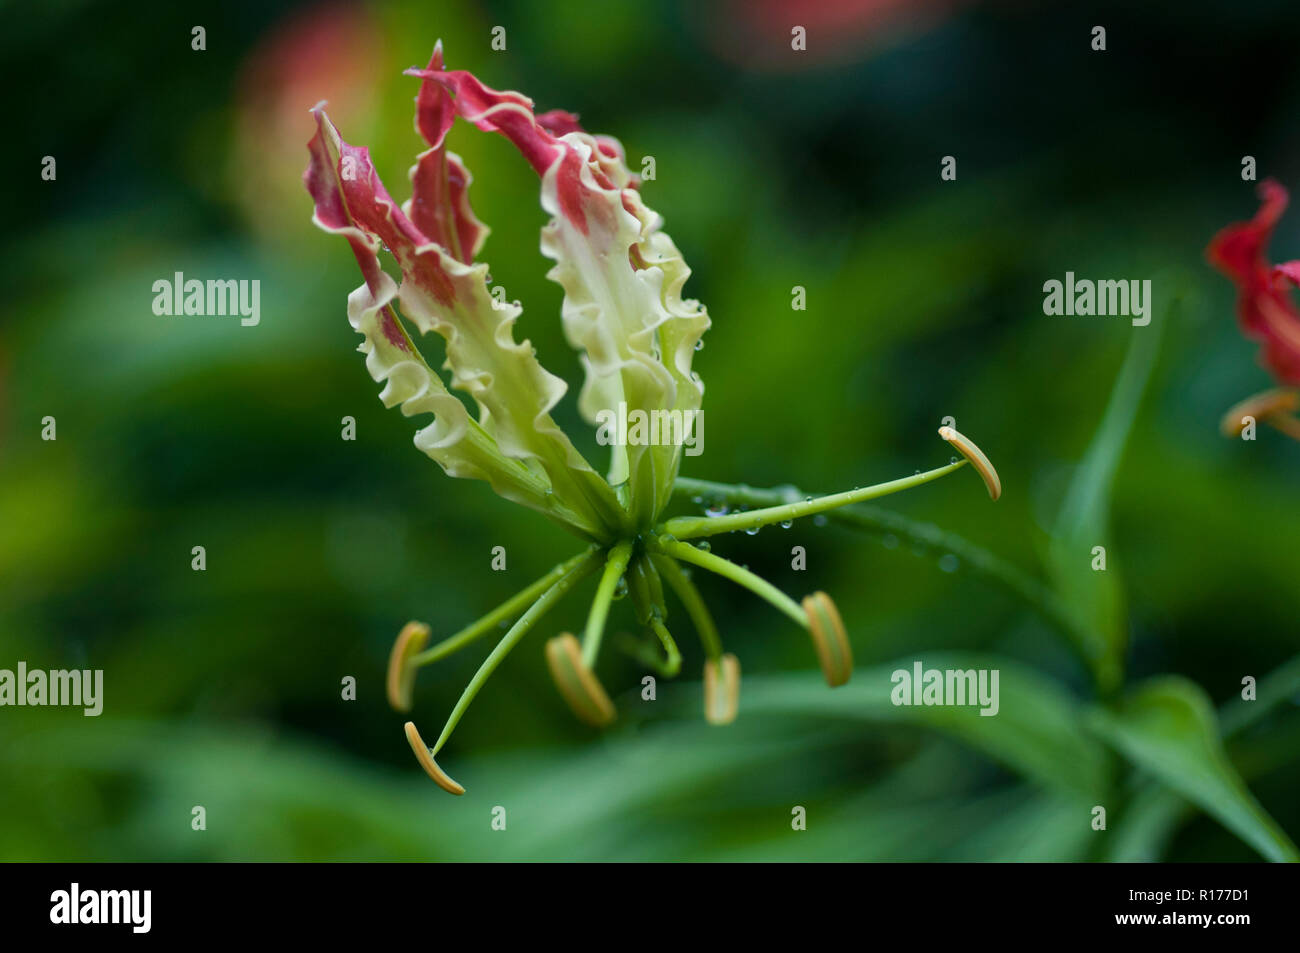 Glory Lily also known as Gloriosa lily, Tiger claw, claw, Bishalanguli, Ulatchandal, Gloriosa superba. Bangladesh. Stock Photo